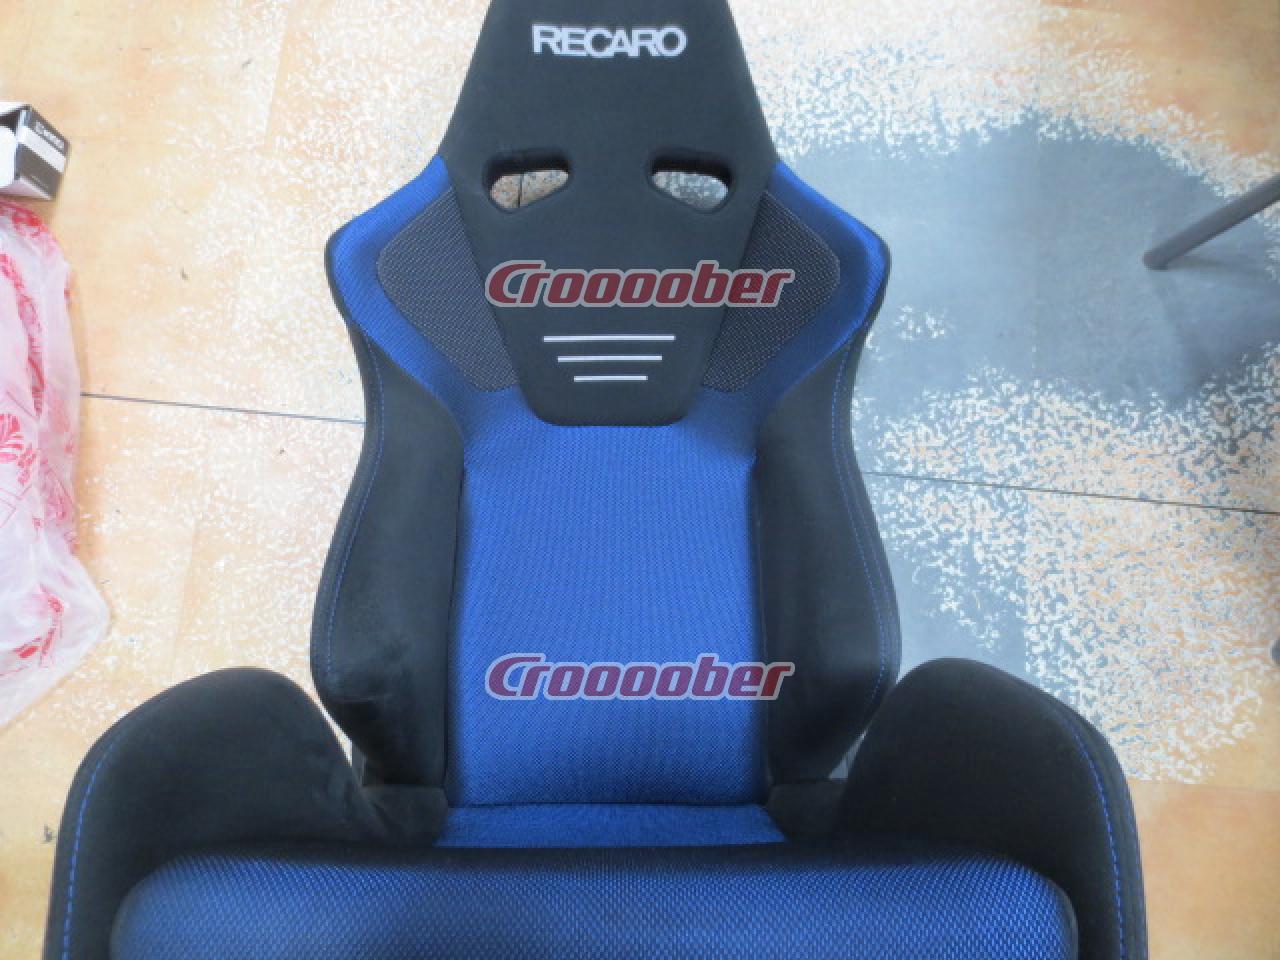 RECARO SR-6 GK 100 S BL | Reclining Seats(RECARO) | Croooober